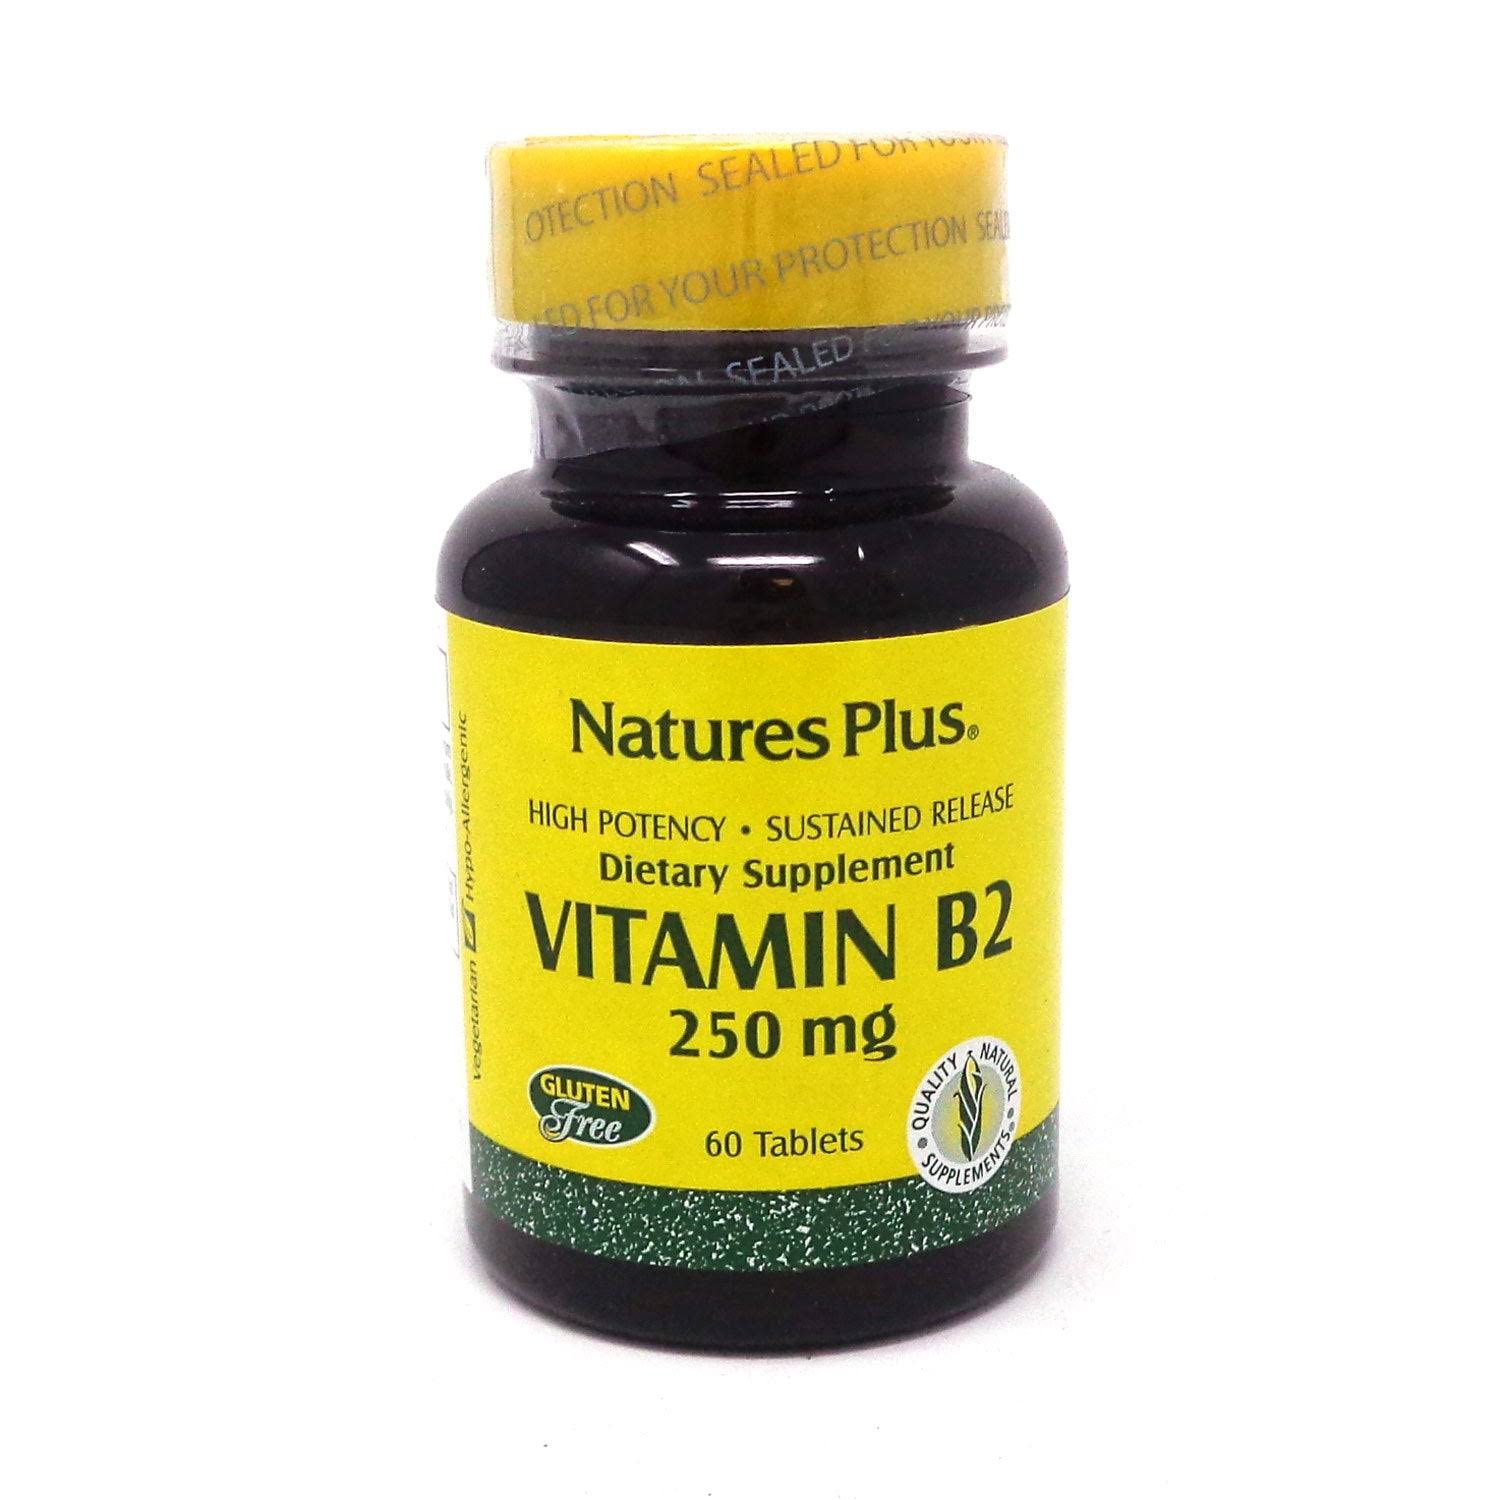 Nature's Plus Vitamin B-2 - 250mg, 60 Tablets